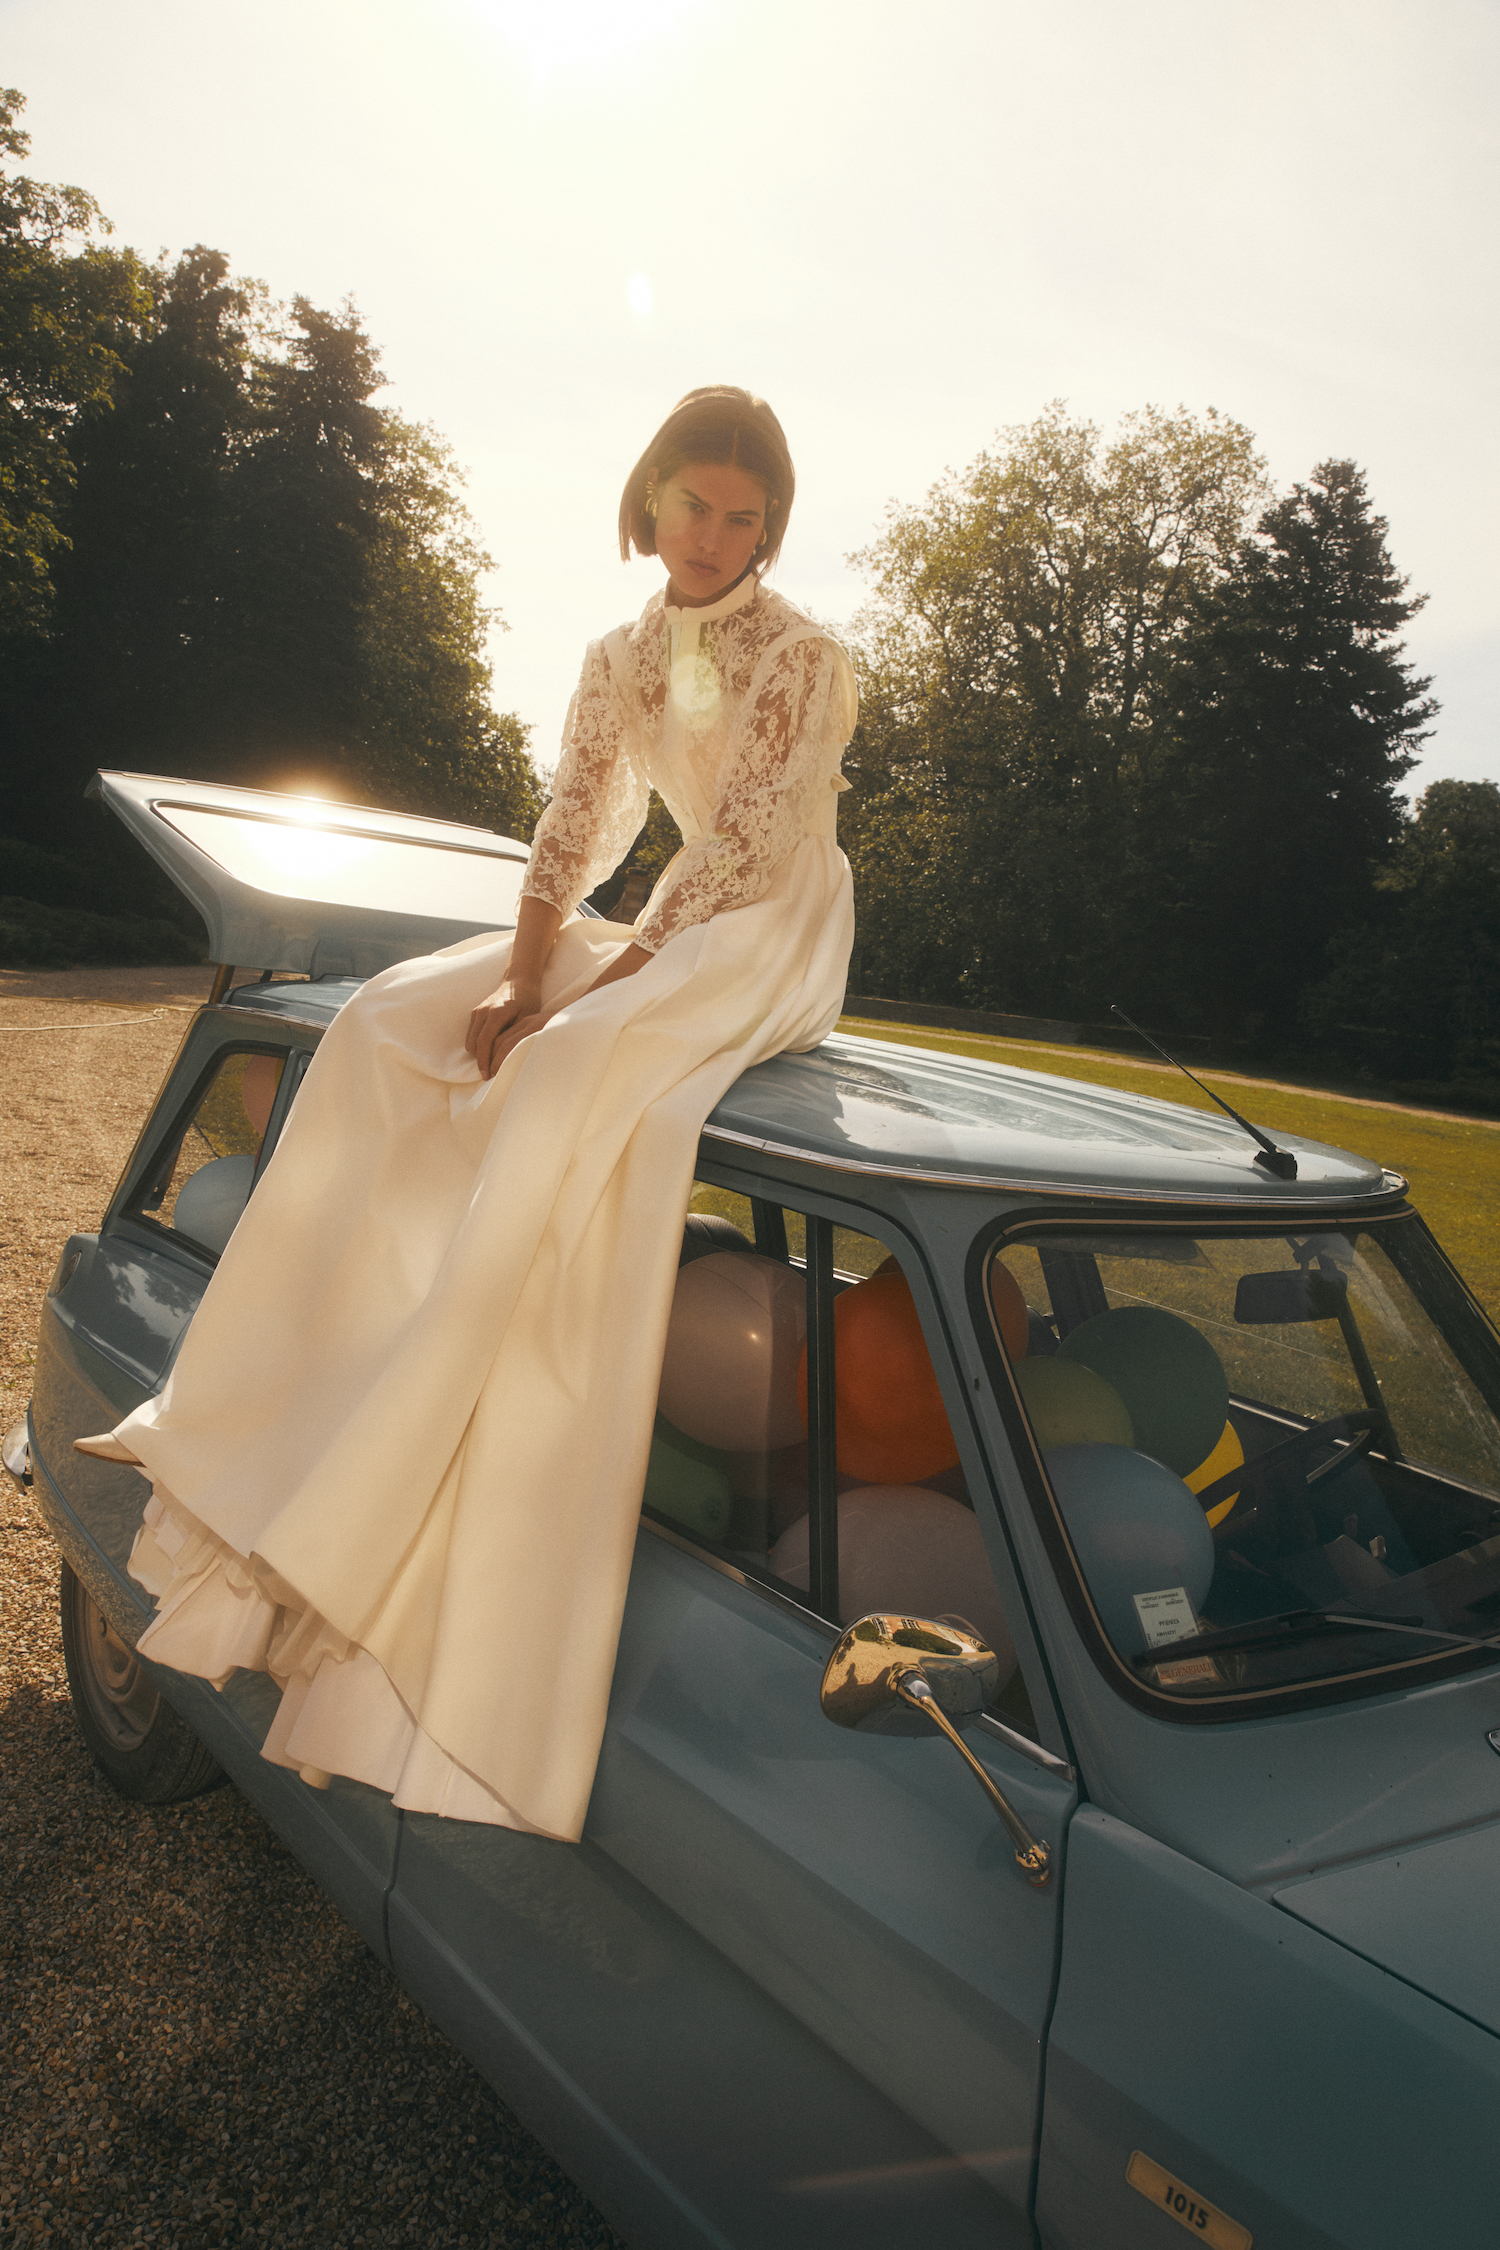 Margaux Tardits Collection 2022 - Robes de mariée - Blog Mariage Madame C